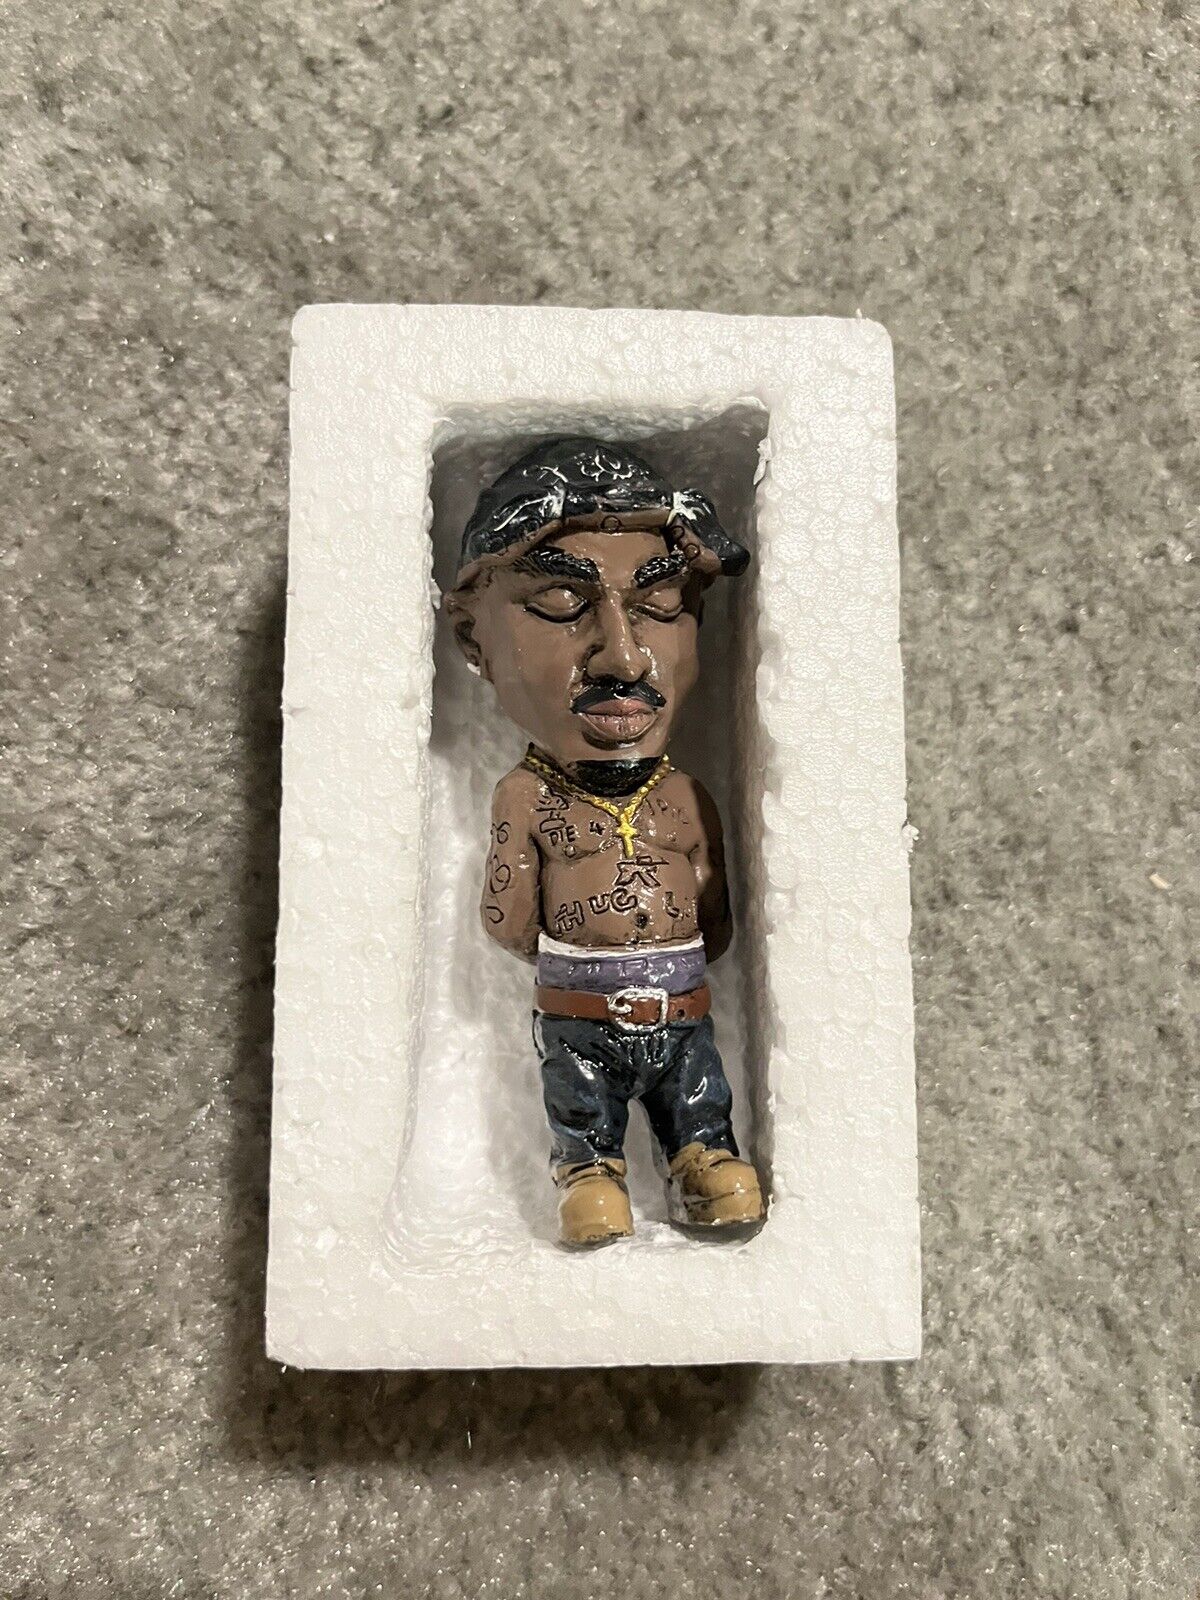 Tupac Shakur 2Pac Hip Hop Rapper Resin Figures Ornament Statue